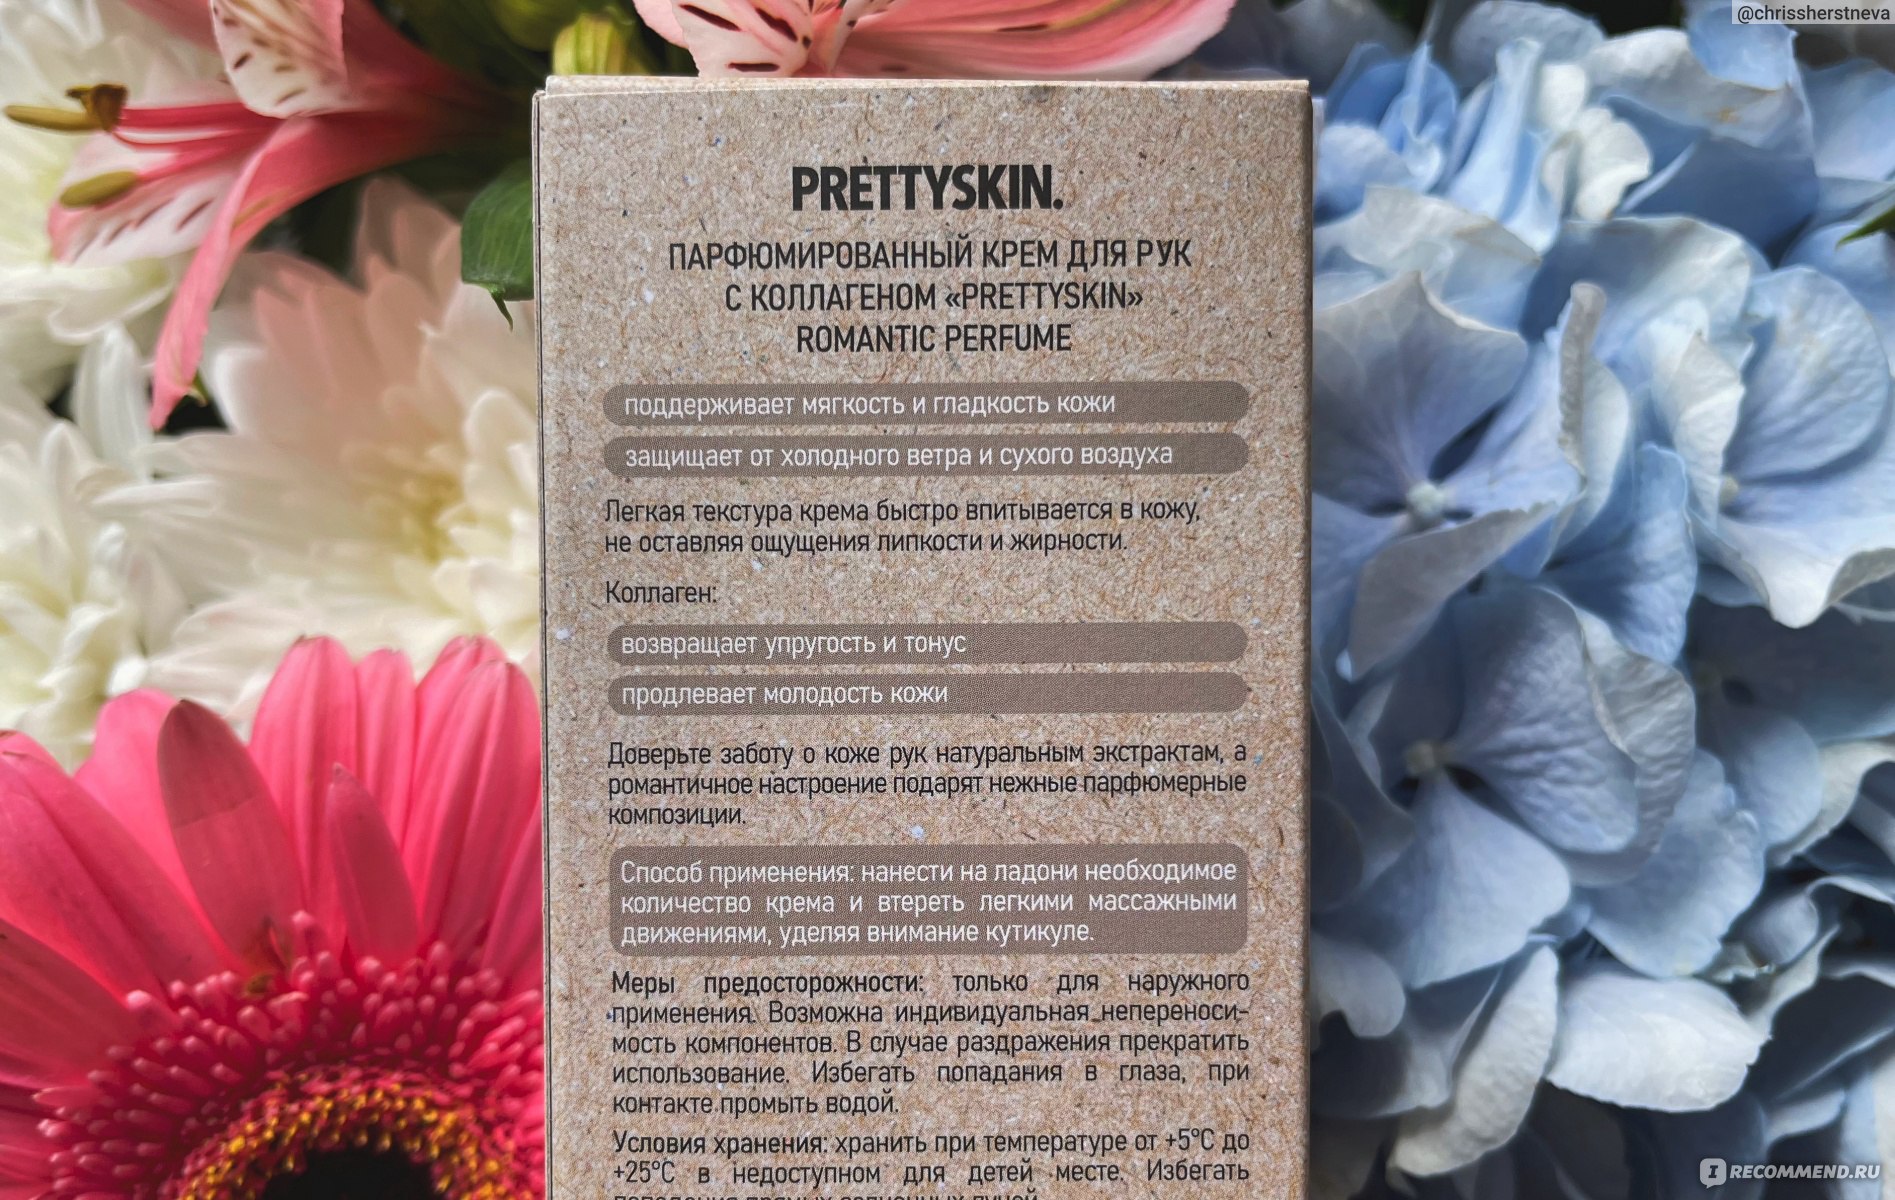 Крем для рук PRETTYSKIN с коллагеном Romantic Perfume - отзыв 